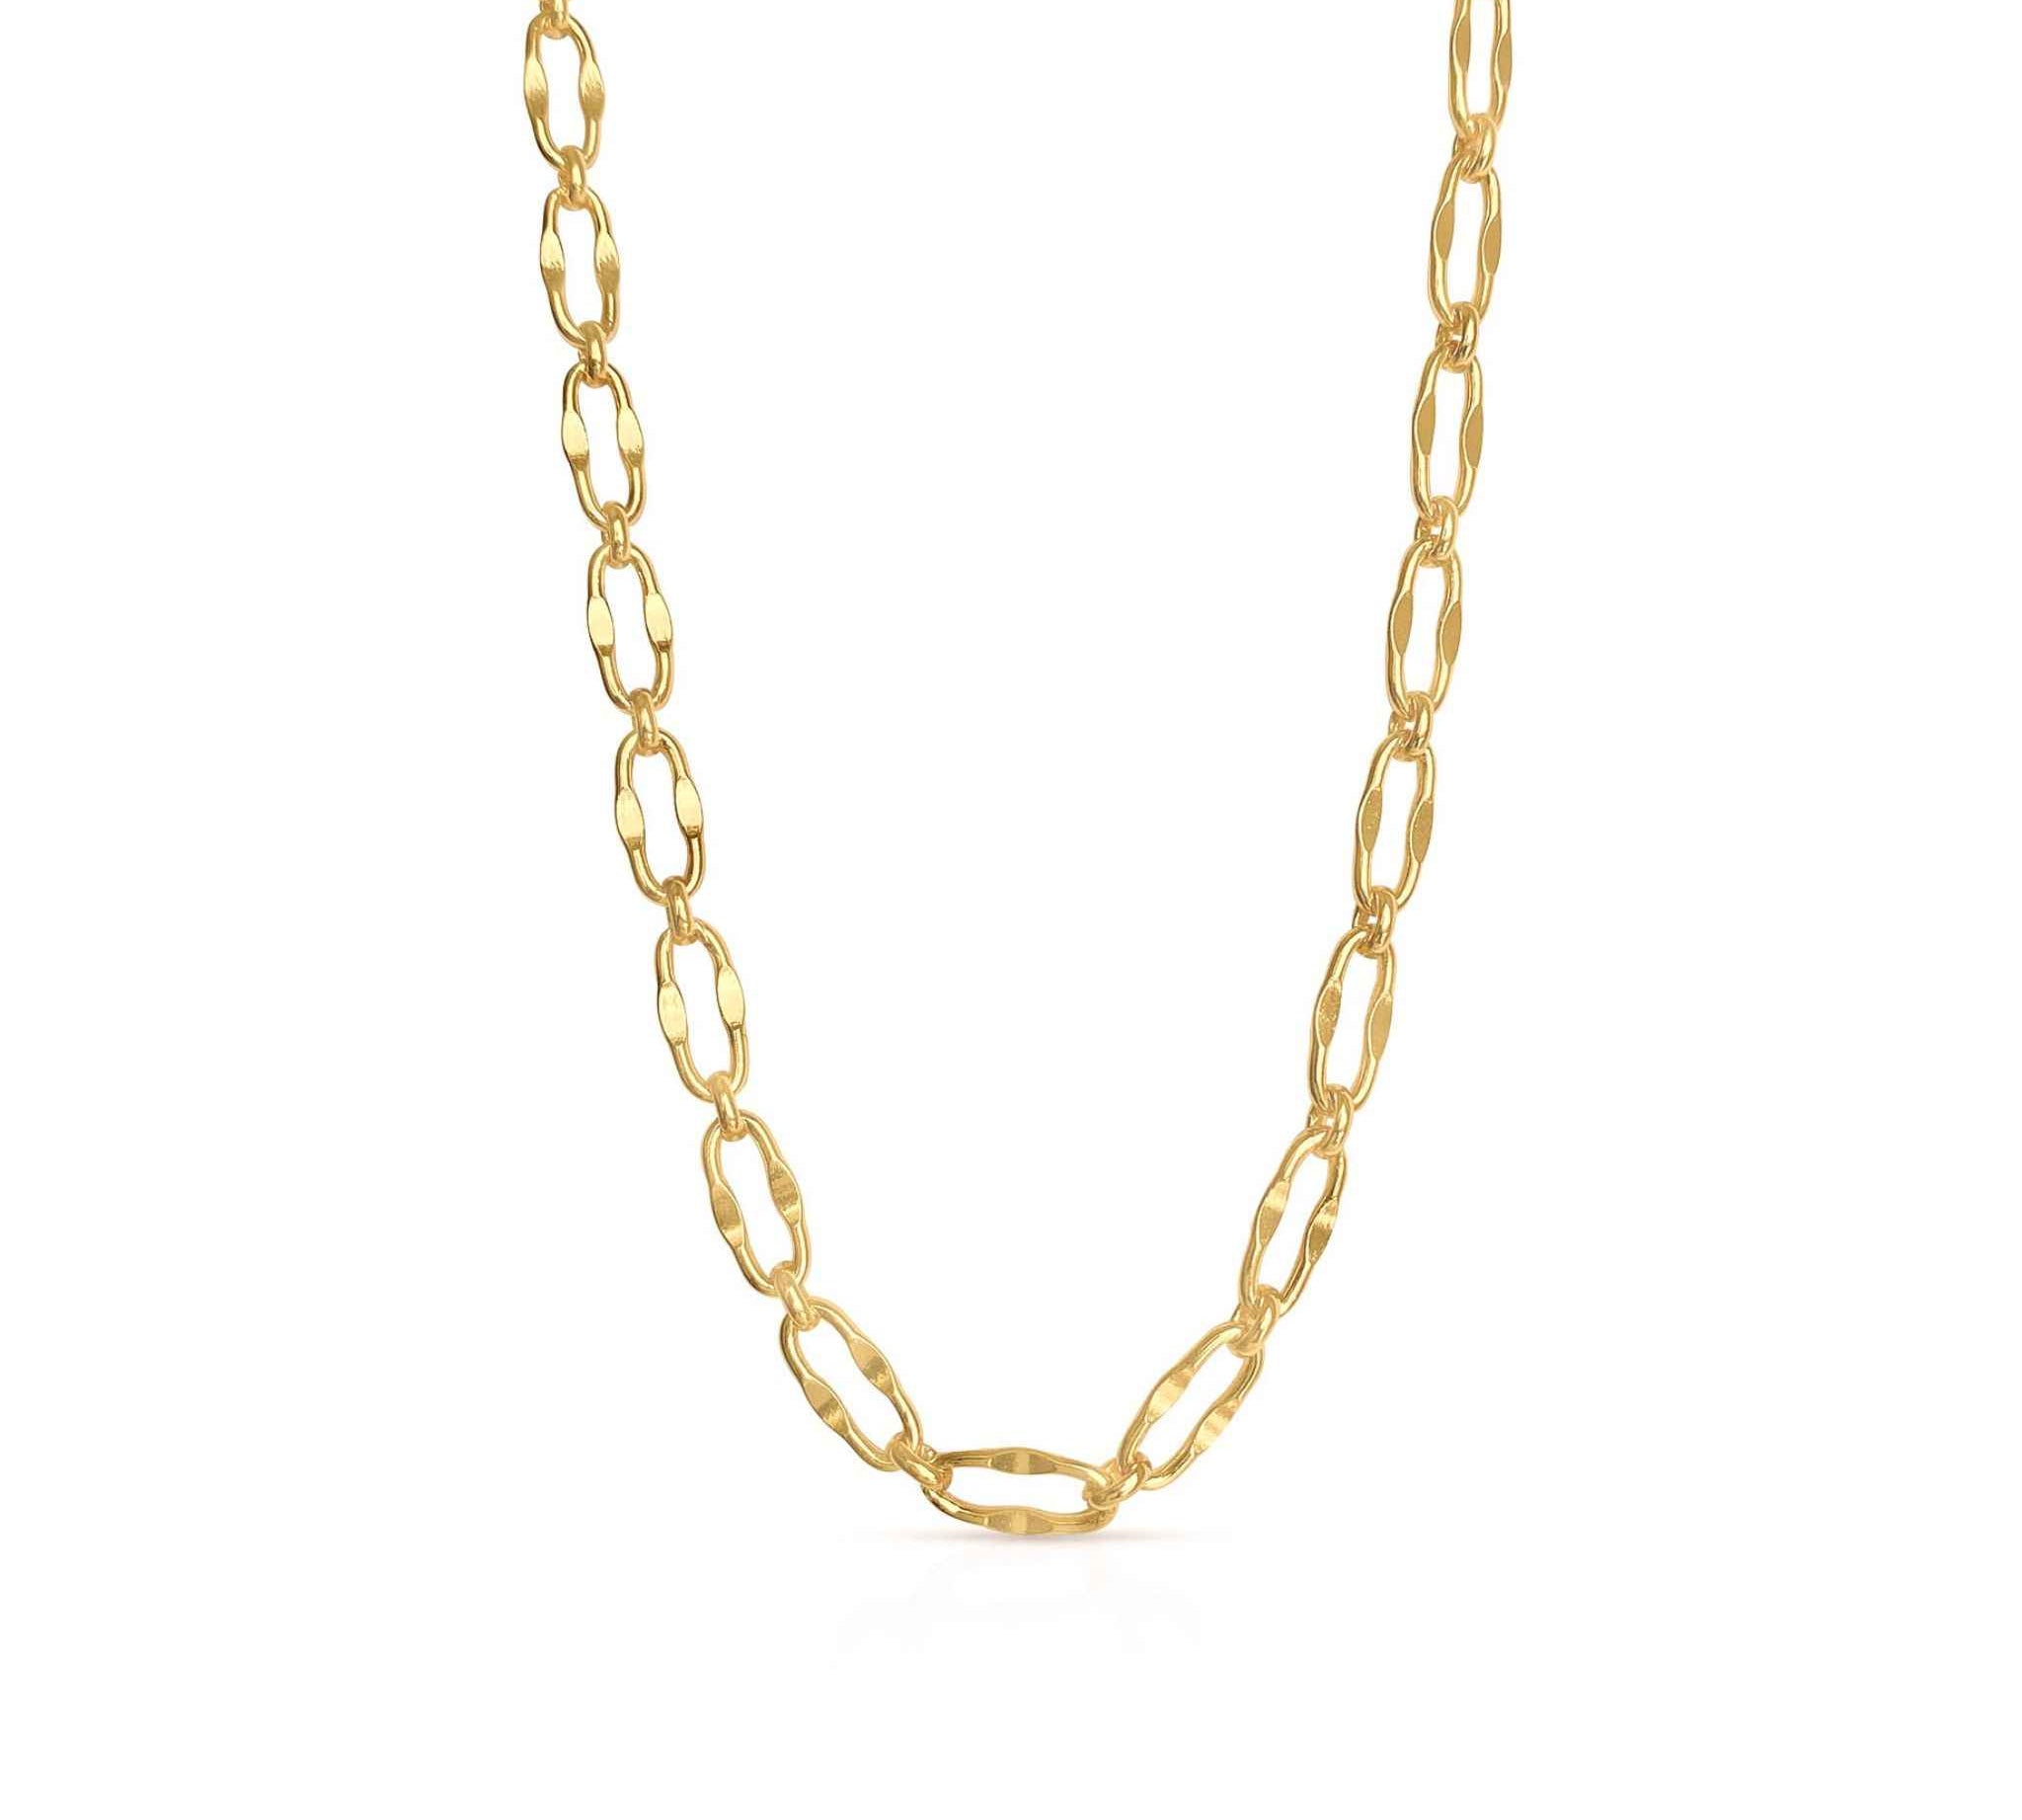 Elegant T-Bar Link Necklace in 18k Gold Plating by Alessandra James.